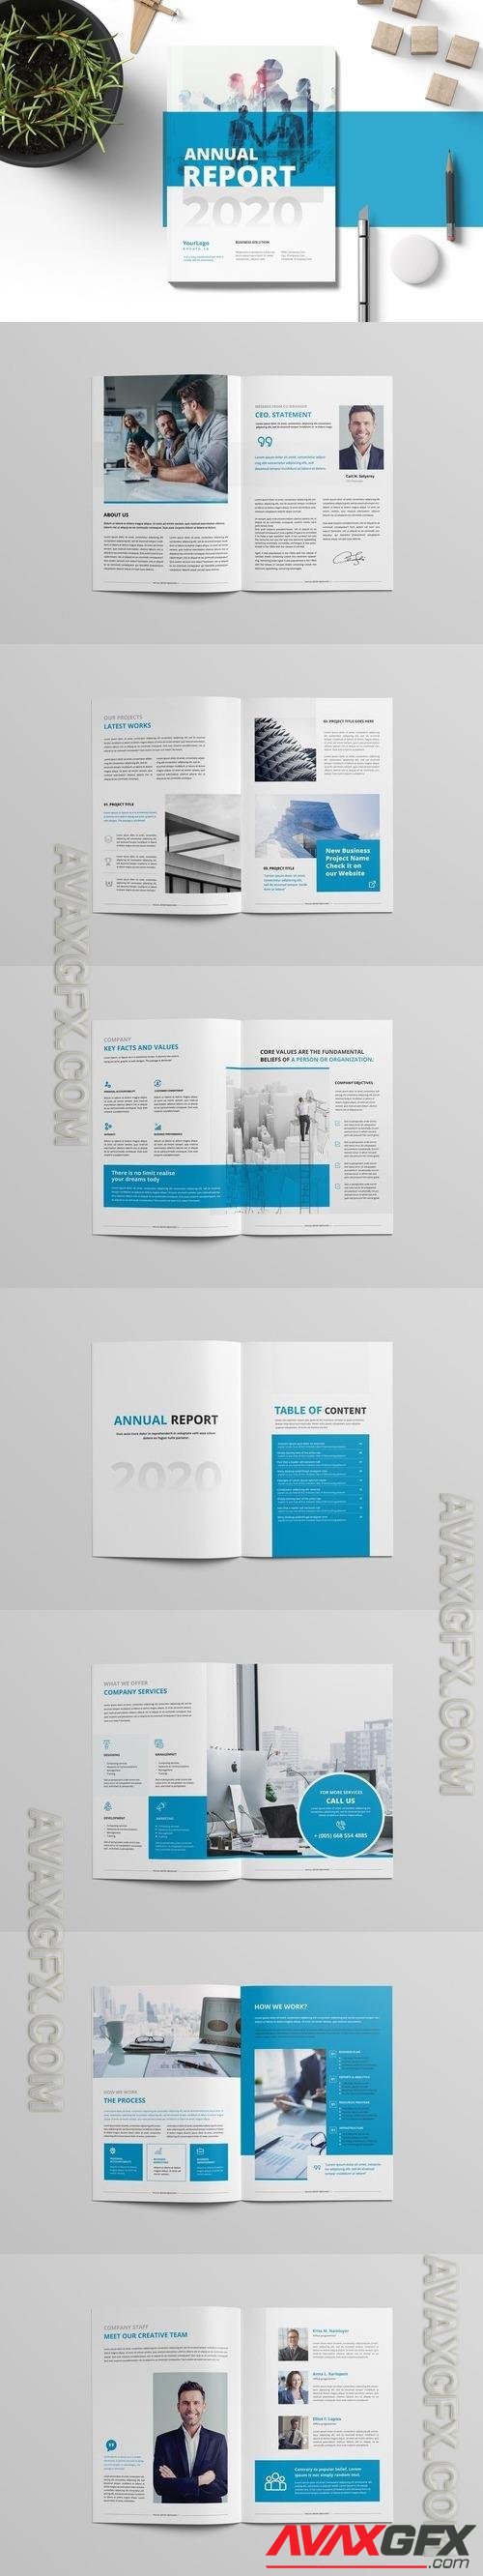 Annual Report Brochure Template